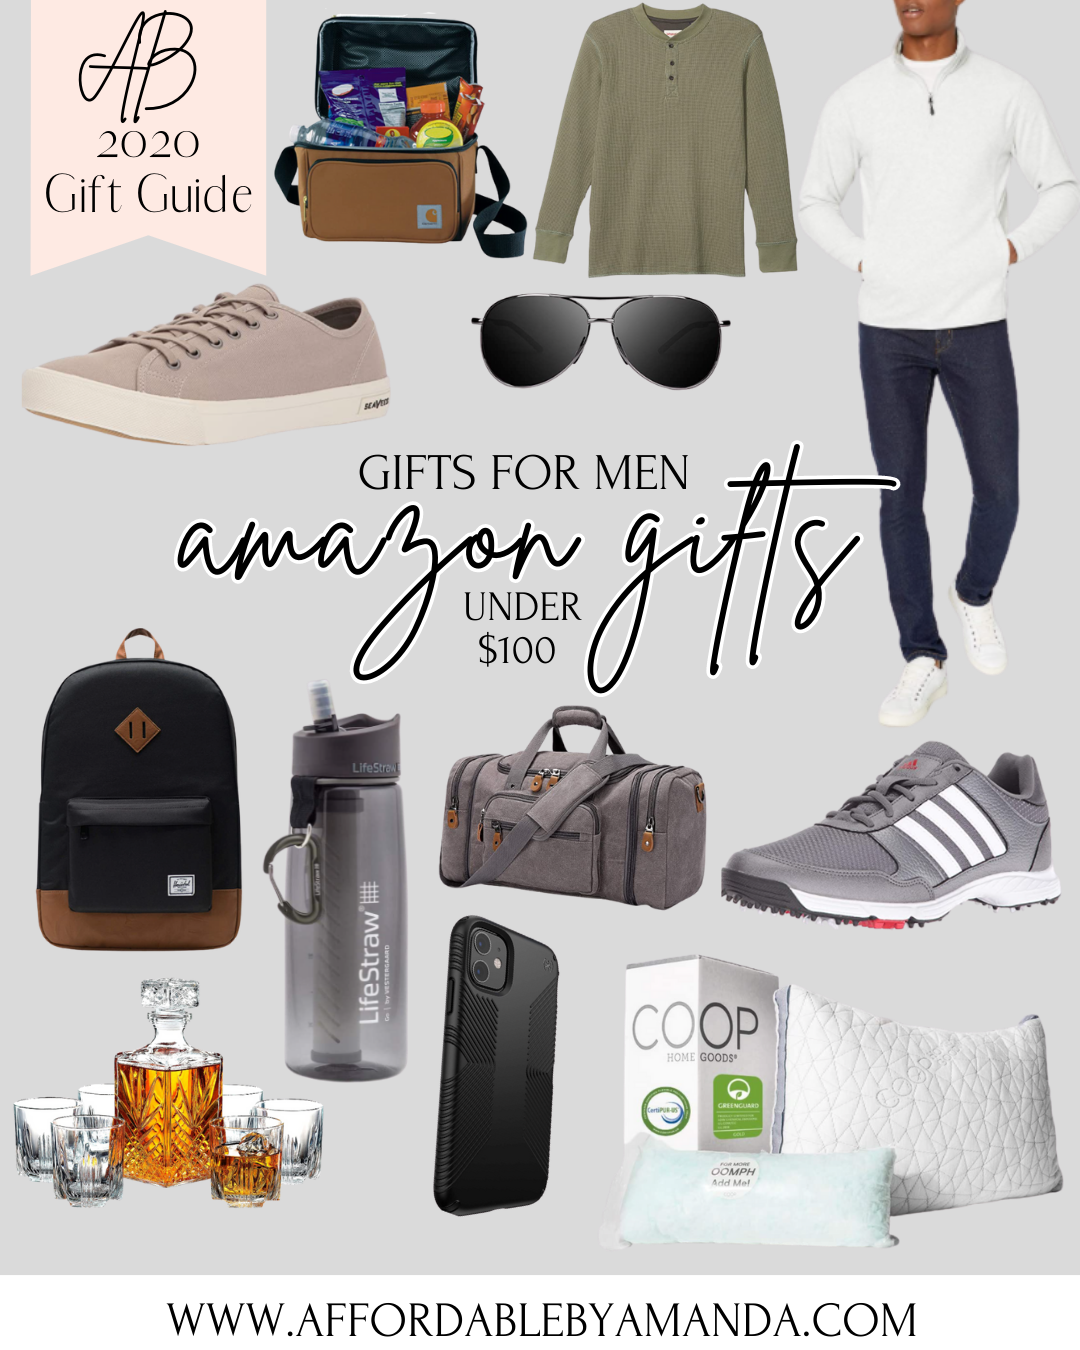 Amazon Gift Ideas - Amazon Gift Ideas for Him - Gifts for Men - Amazon Gifts for Men - Affordable by Amanda